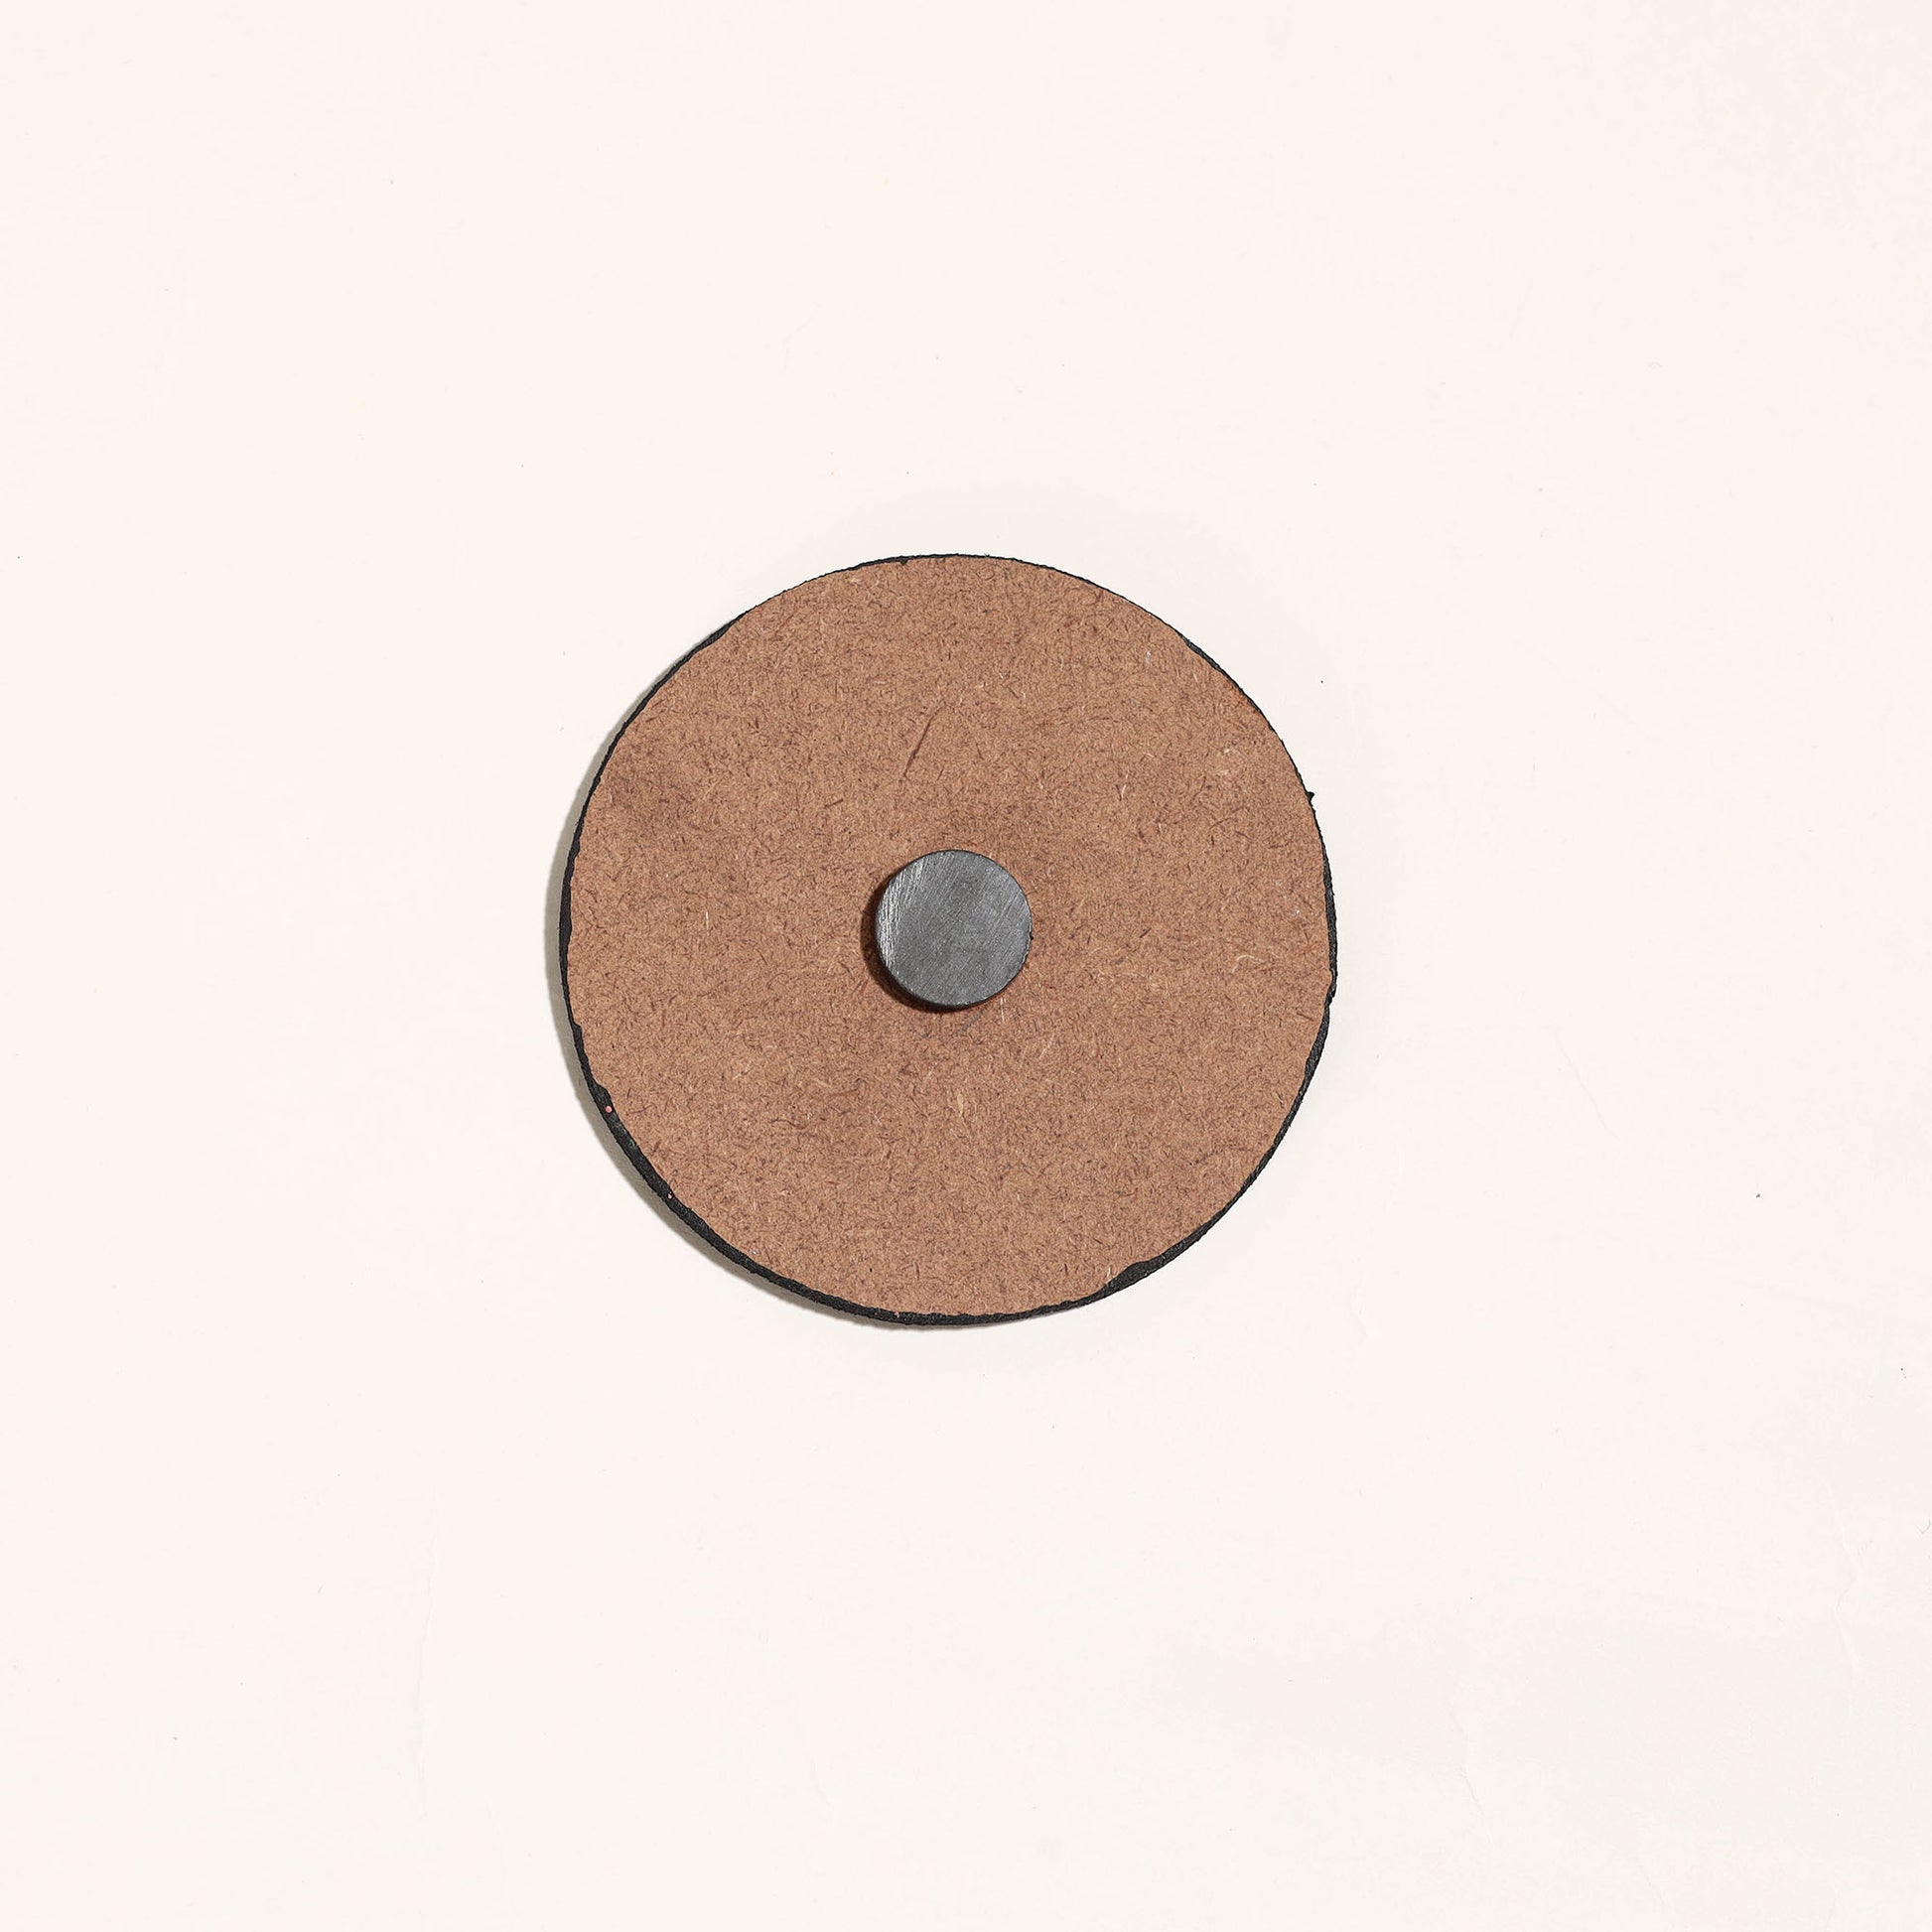 Handpainted Wooden Magnet